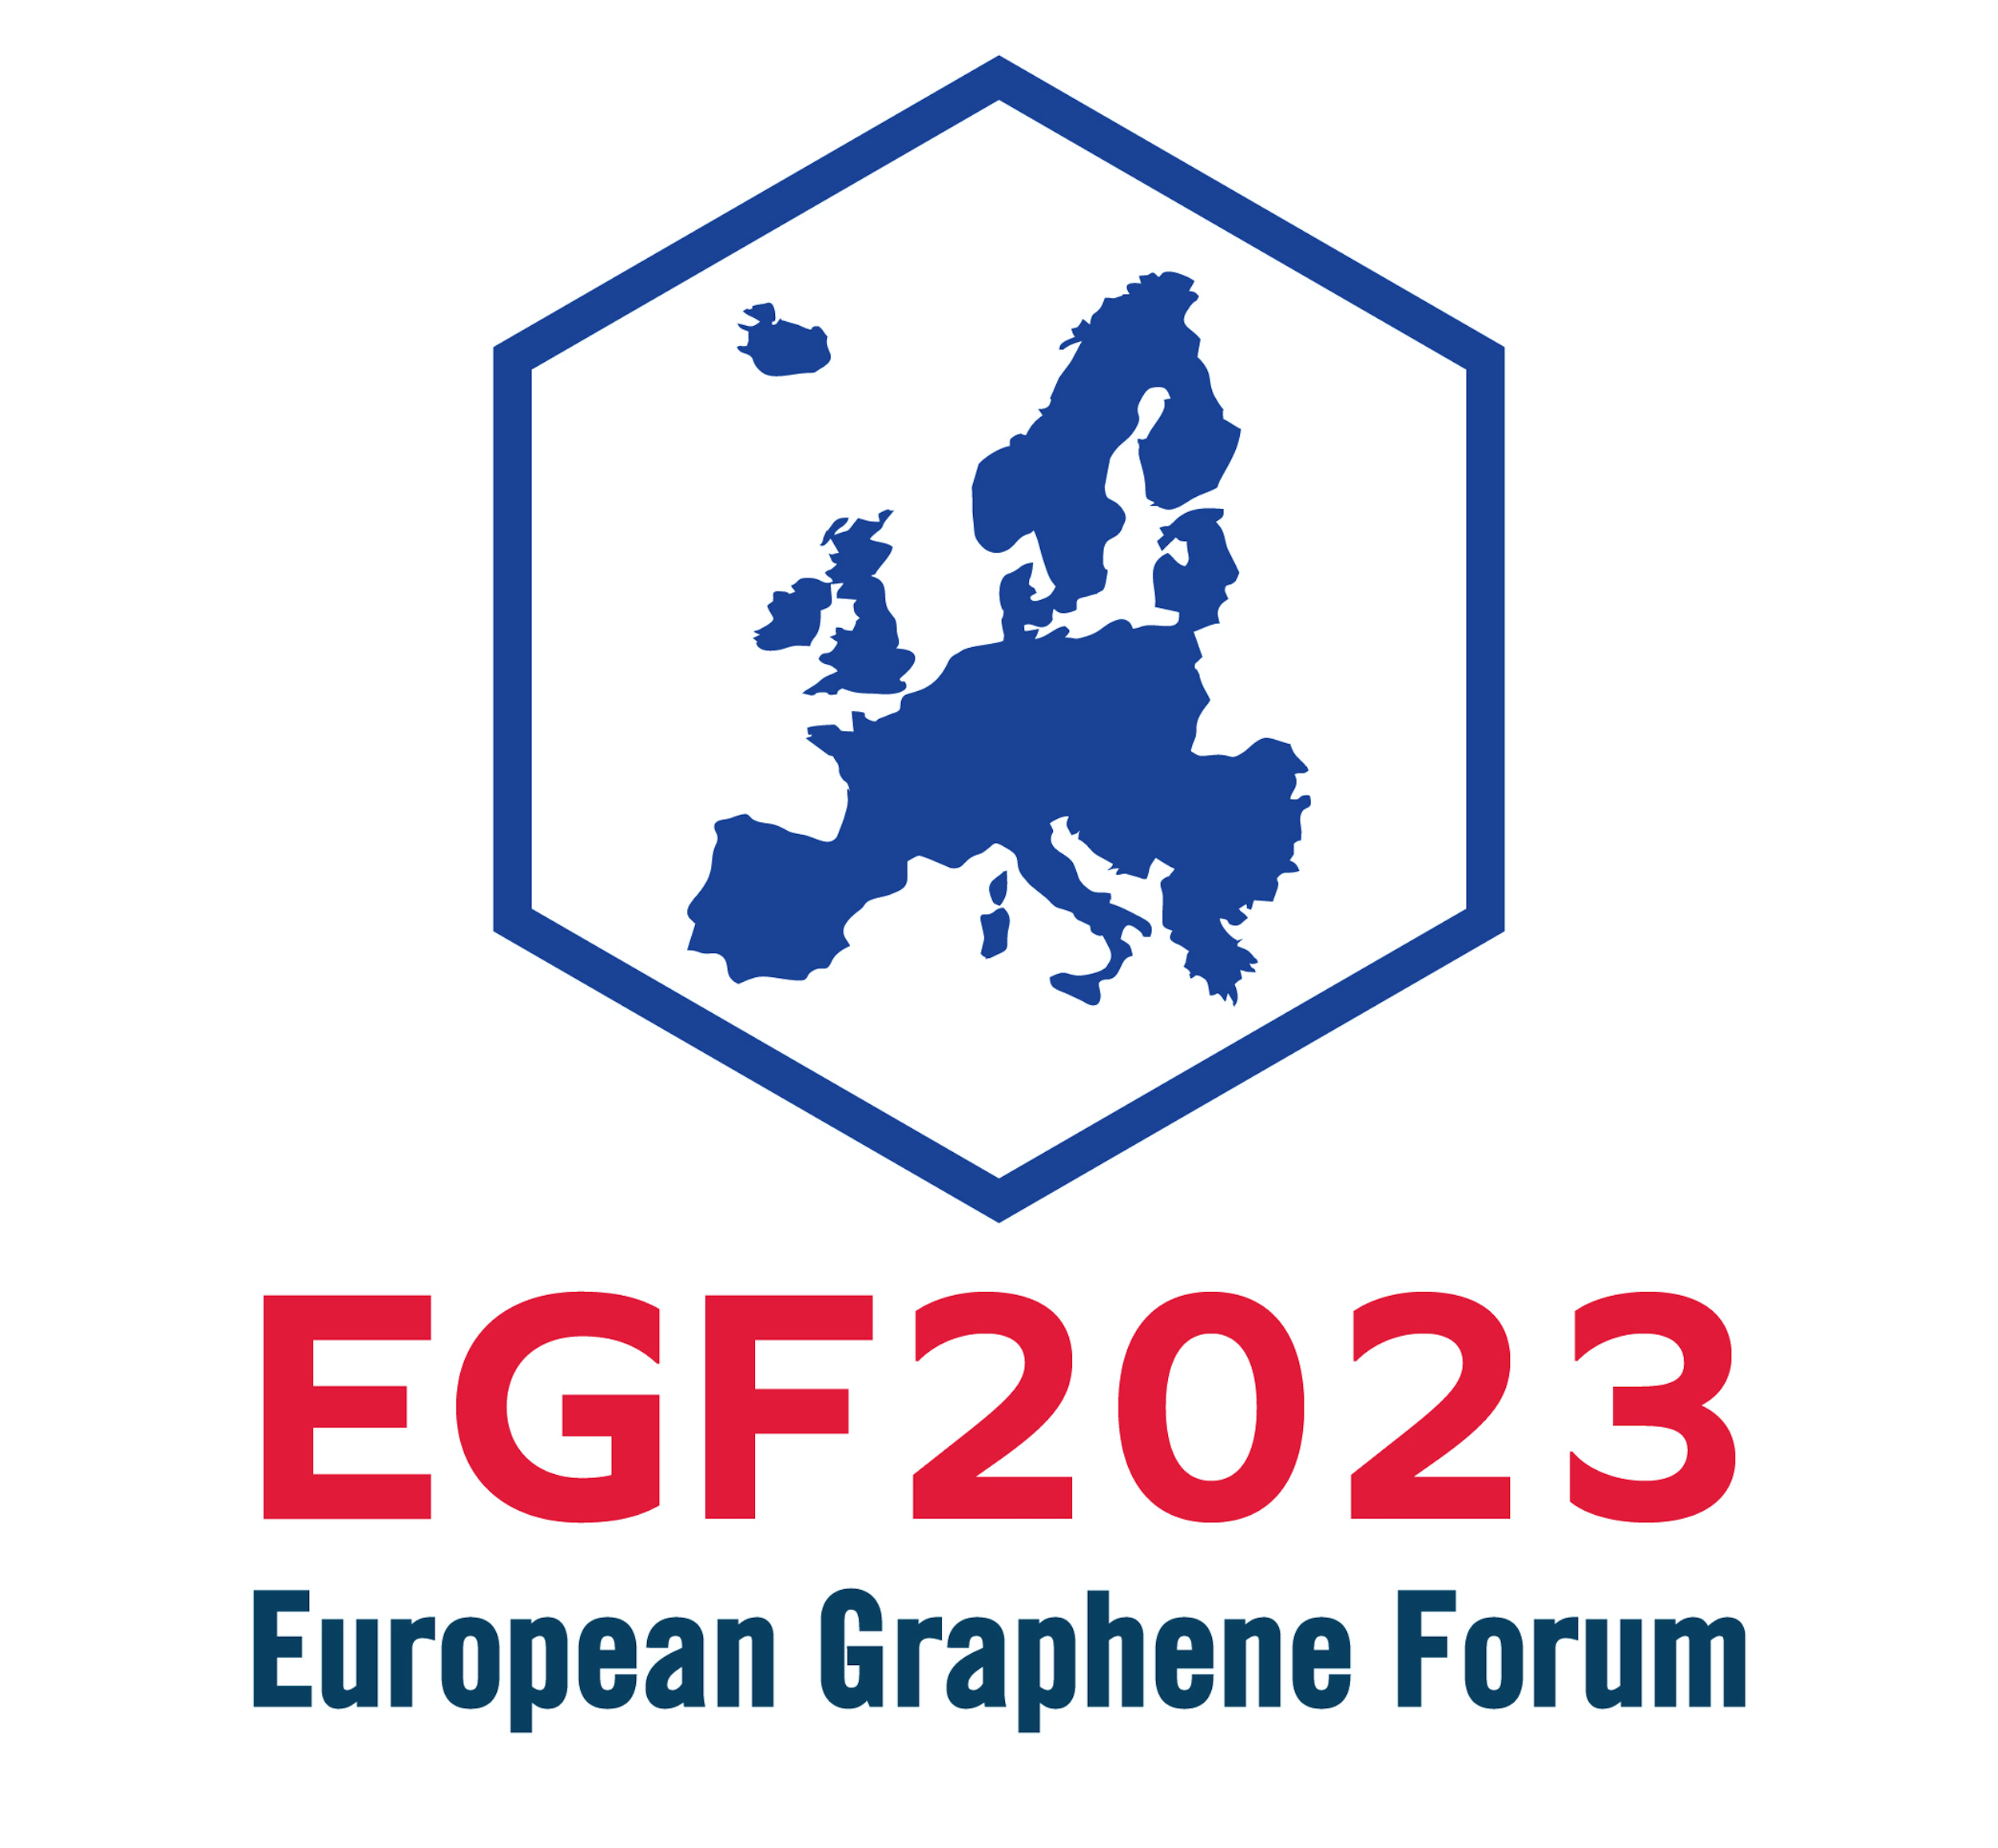 The 8th Ed. of the European Graphene Forum - EGF 2023